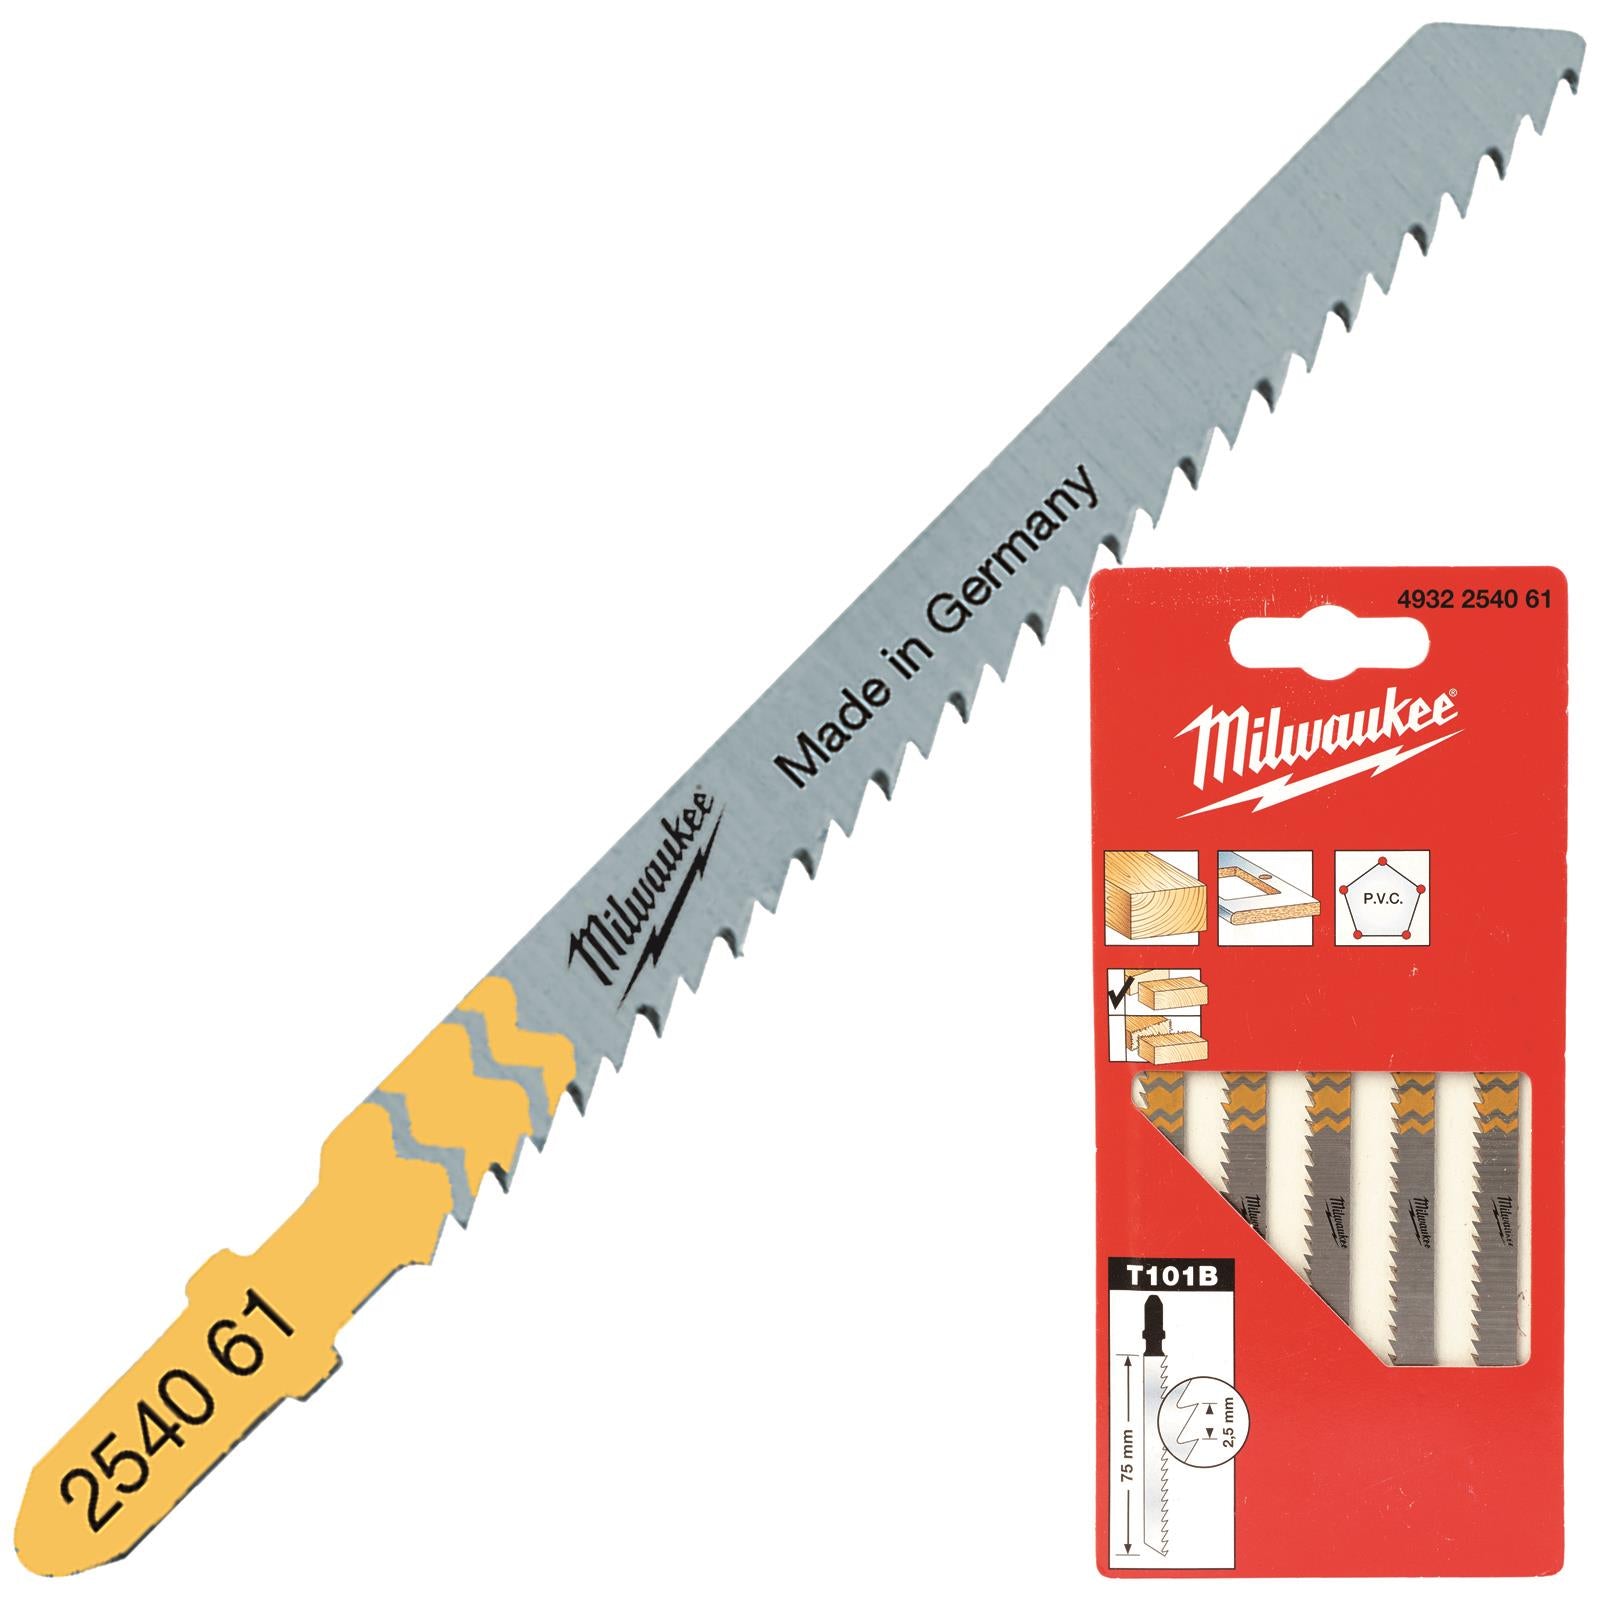 Milwaukee Jigsaw Blades Wood and Plastic 5 Pack Clean Cut 75mm x 2.5mm T101B